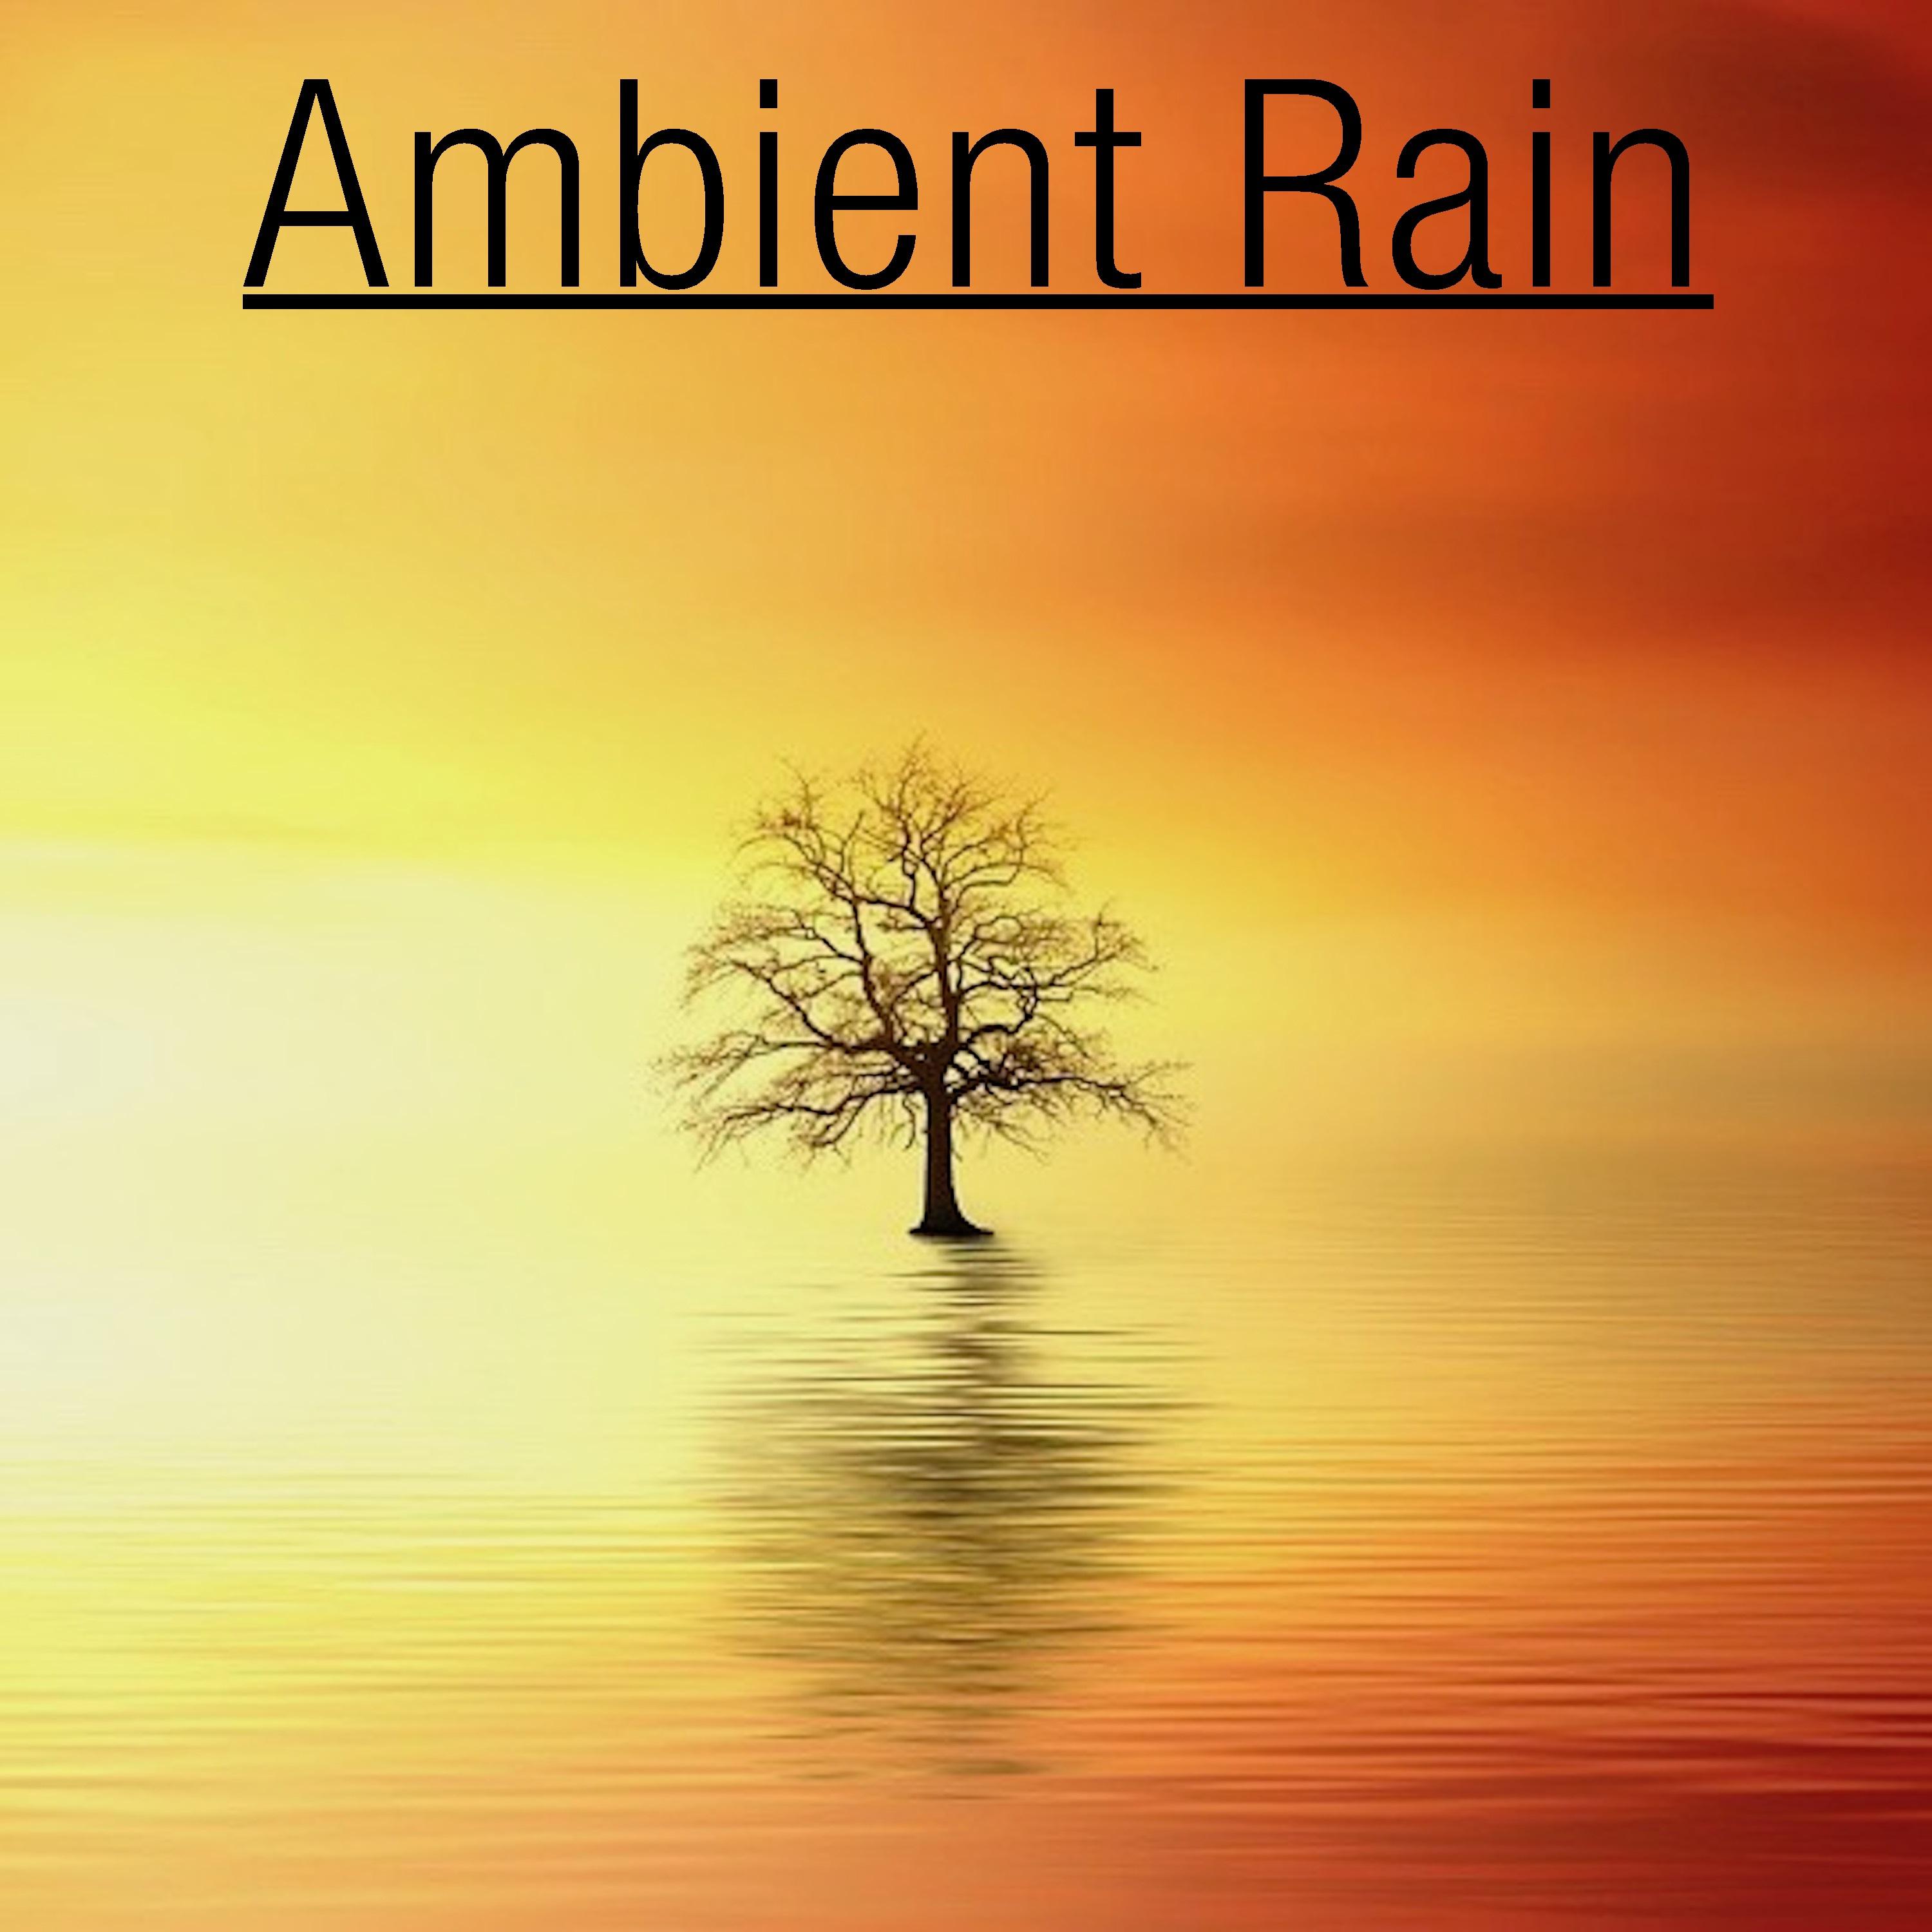 17 Ambient Rain Noises for Sleep & Spa